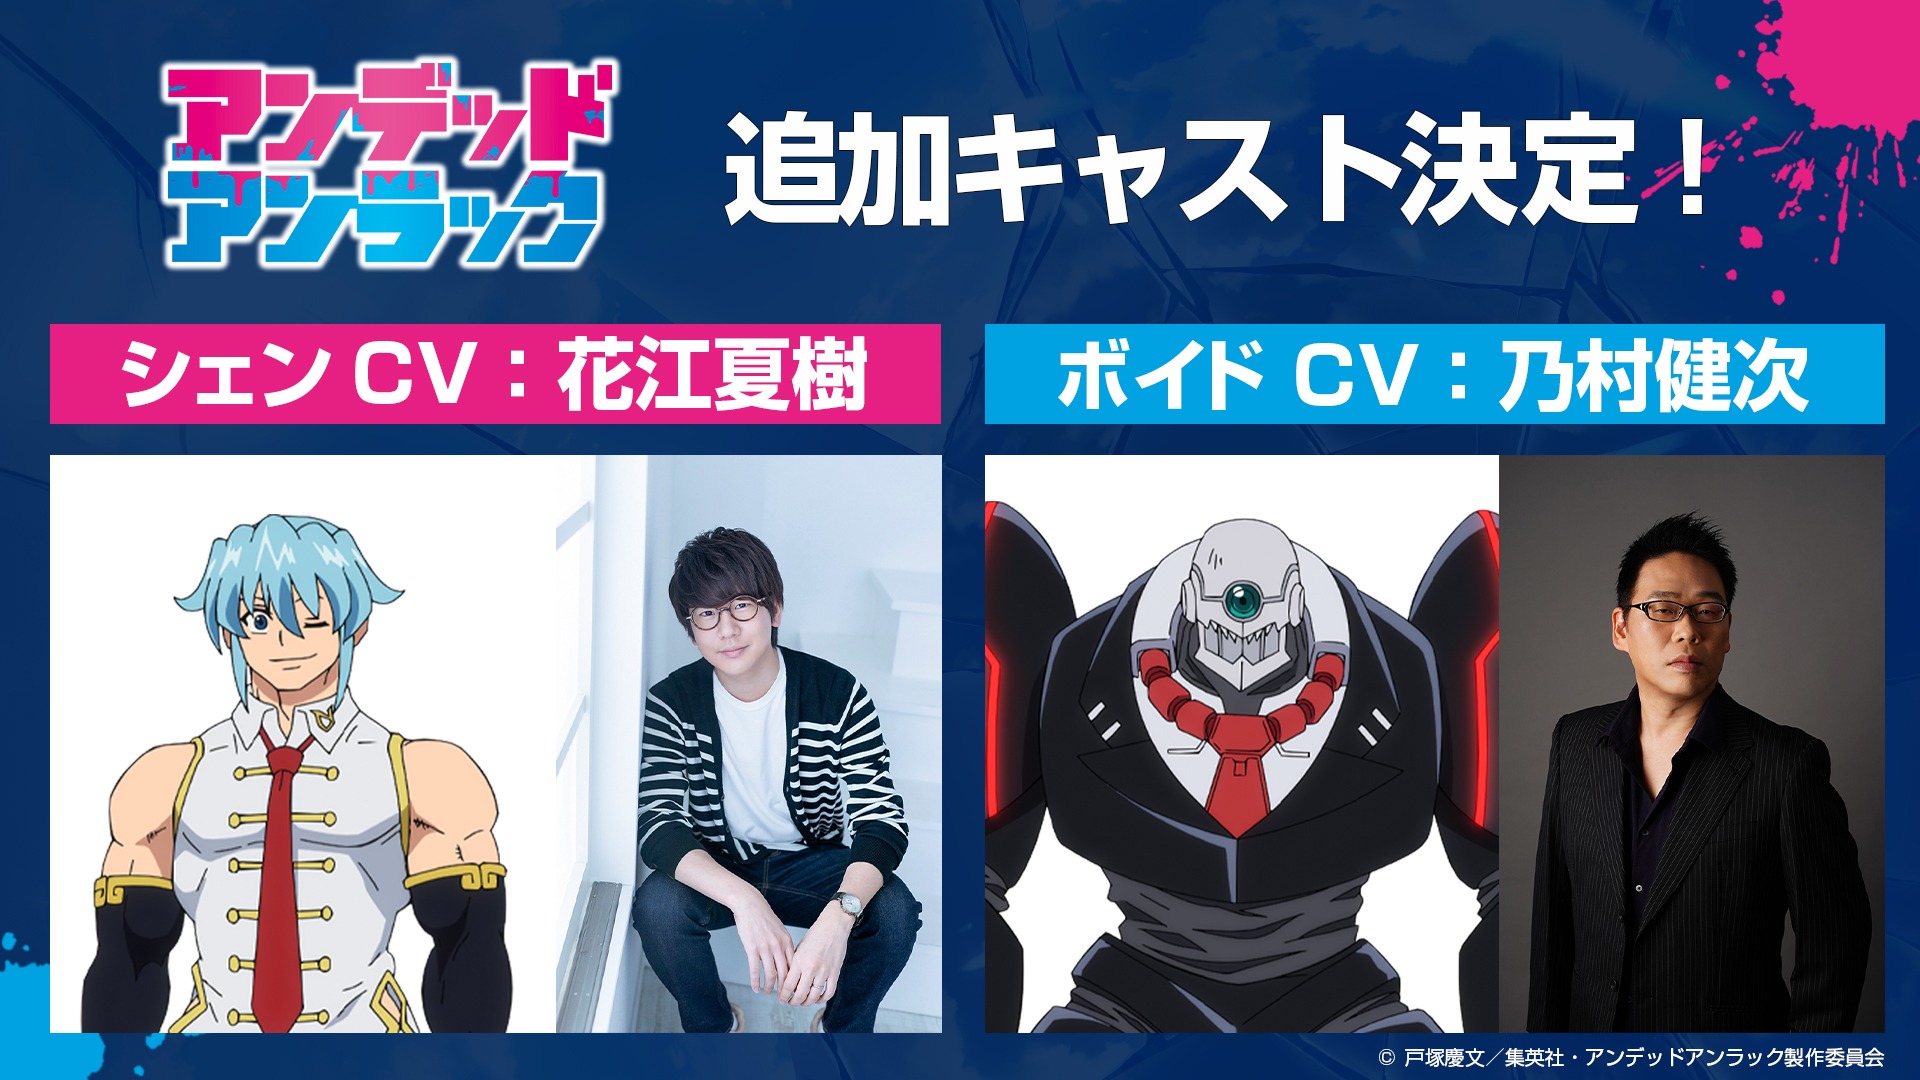 TV Anime Undead Unluck @ Dash Store, Events